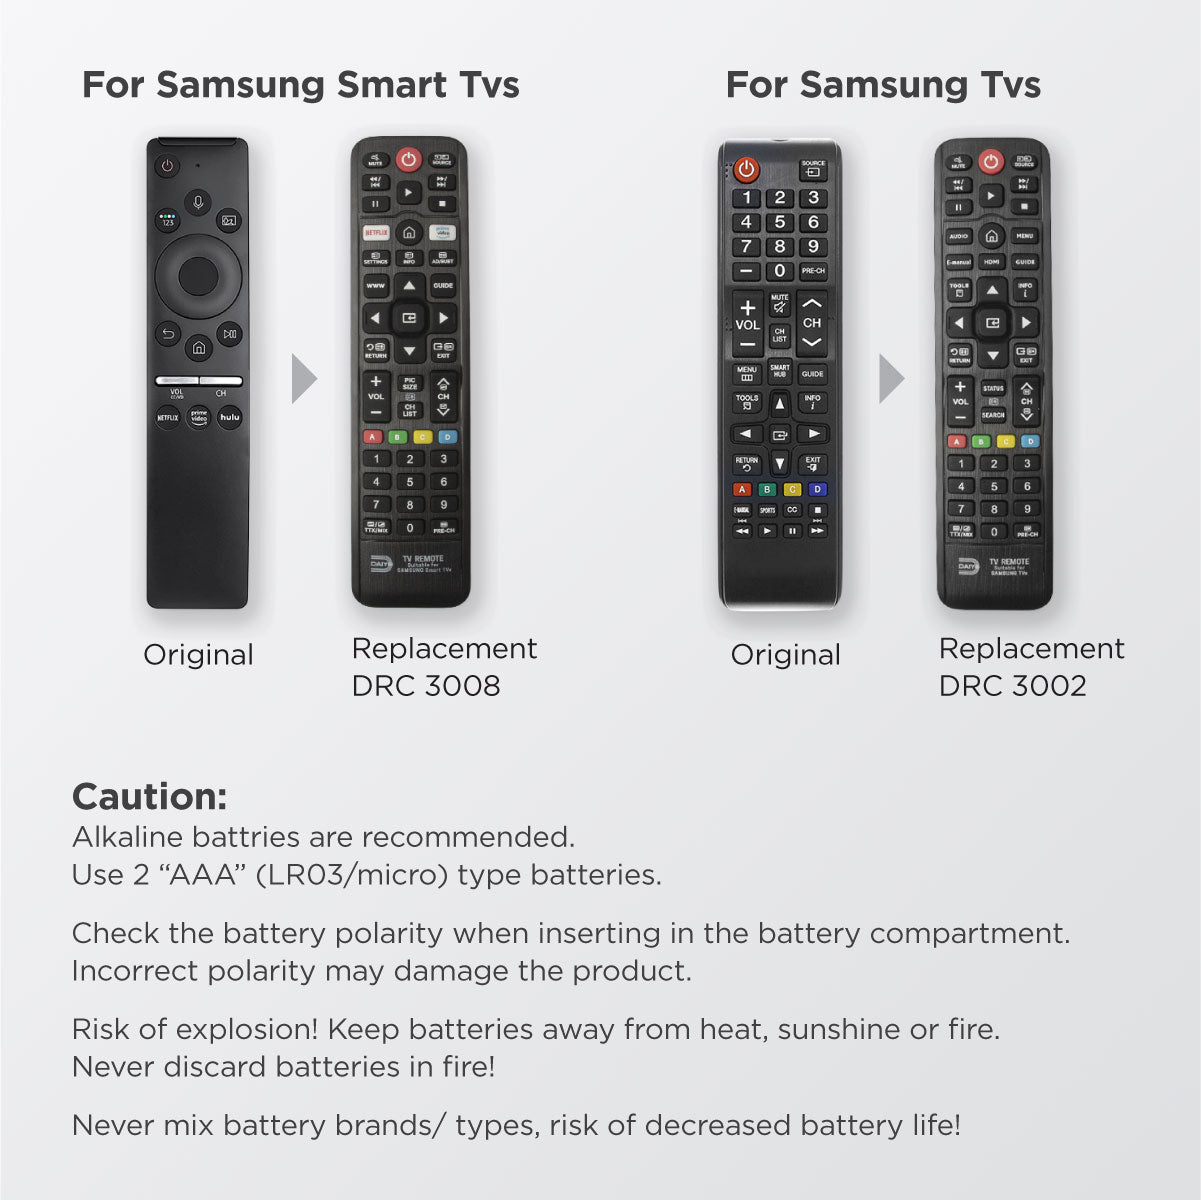 Daiyo DRC 3002 Remote Control for Samsung TVs